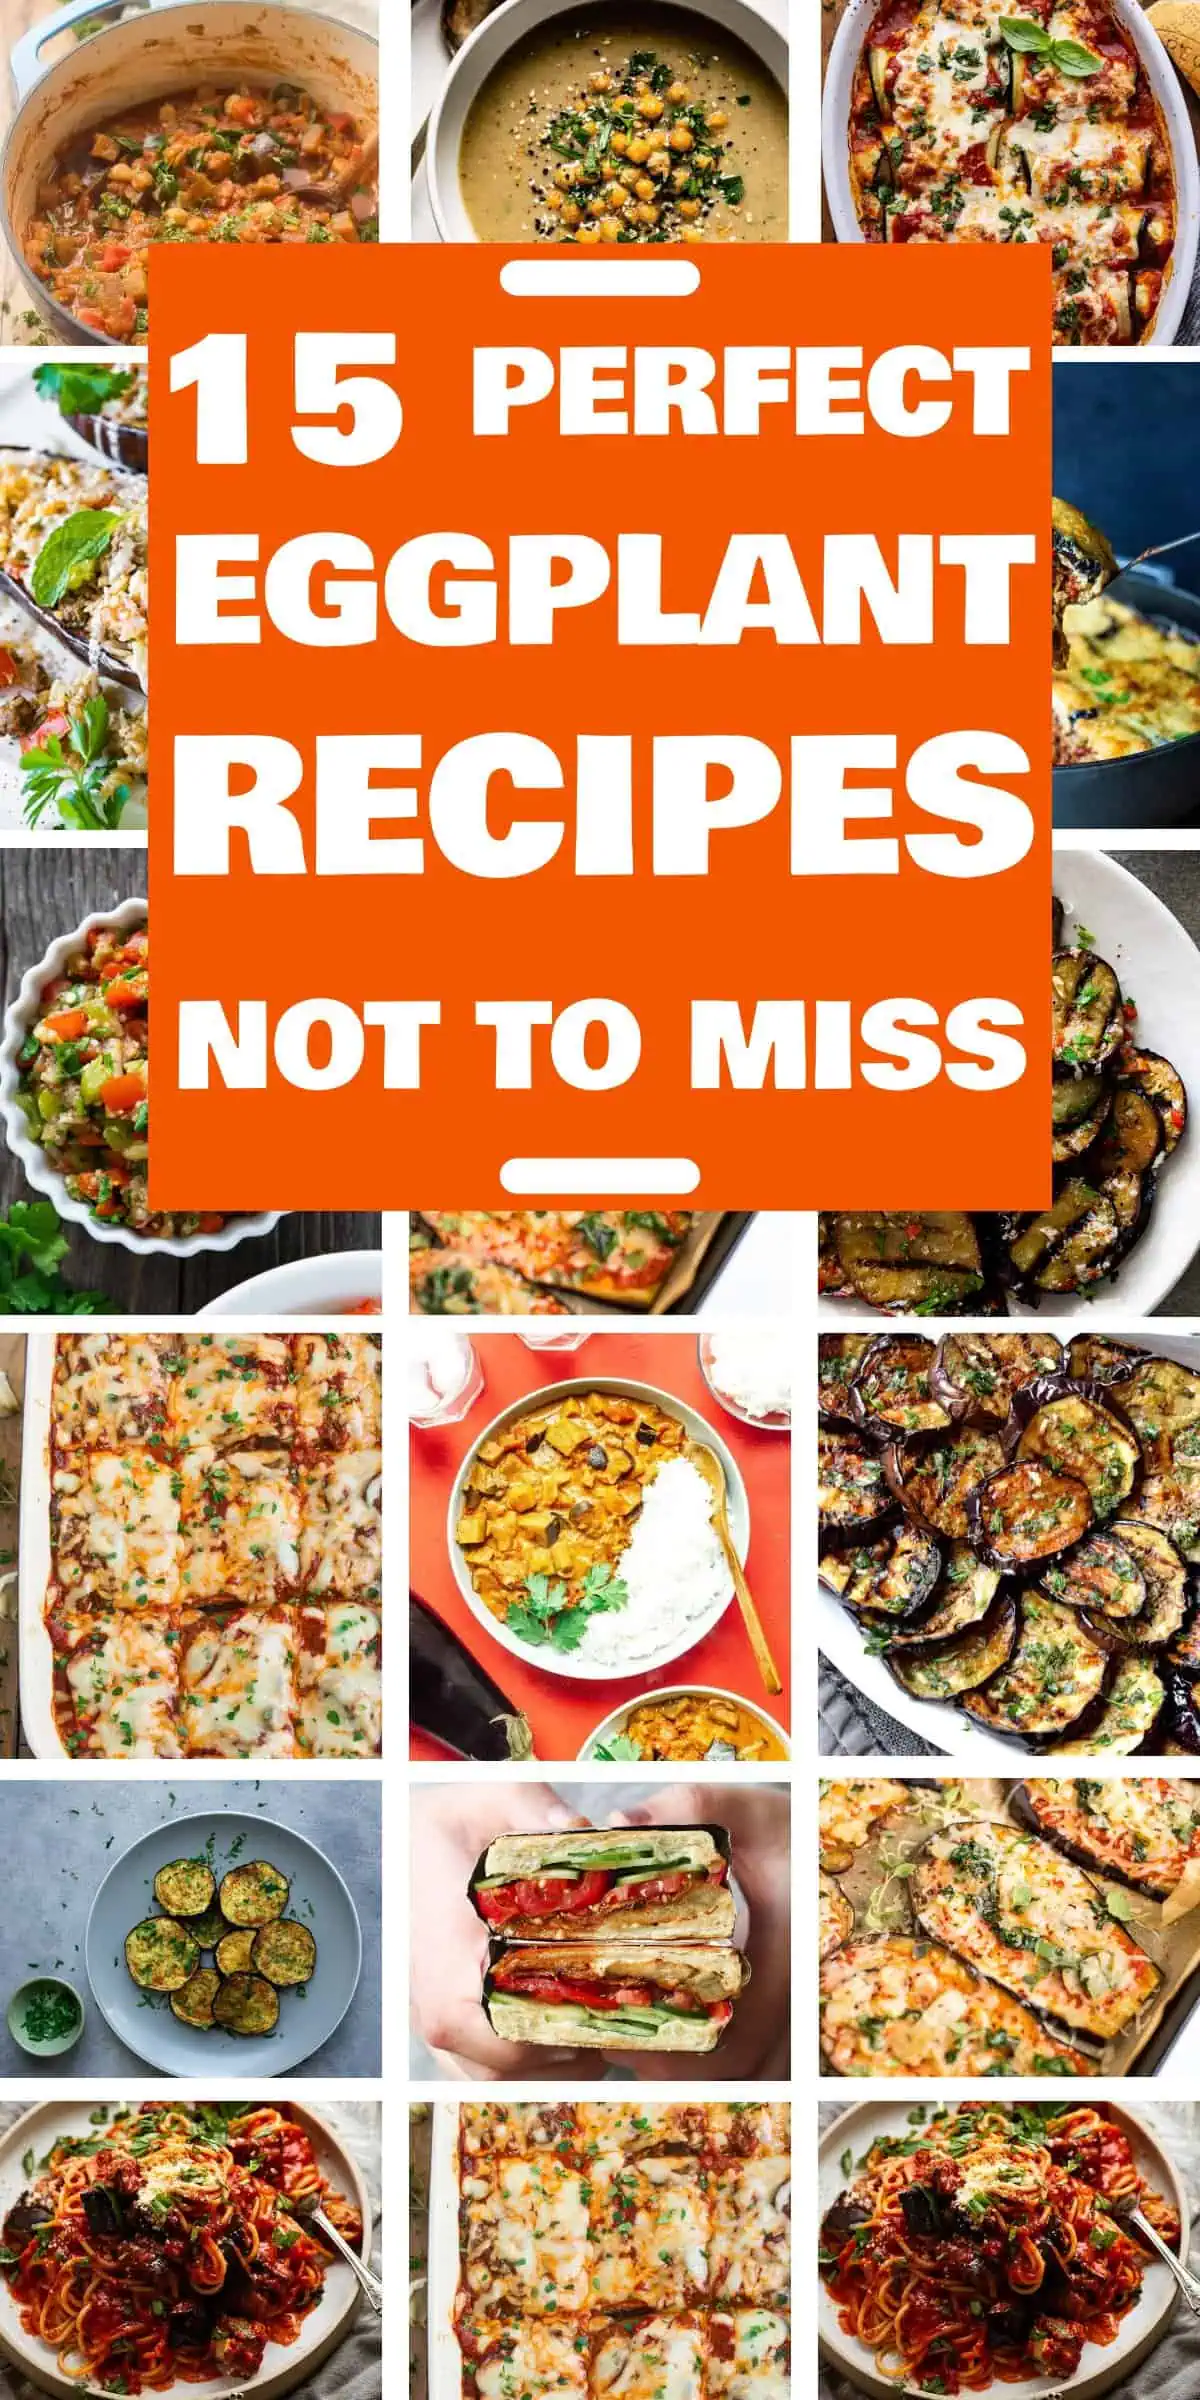 15 Delicious Eggplant Recipes